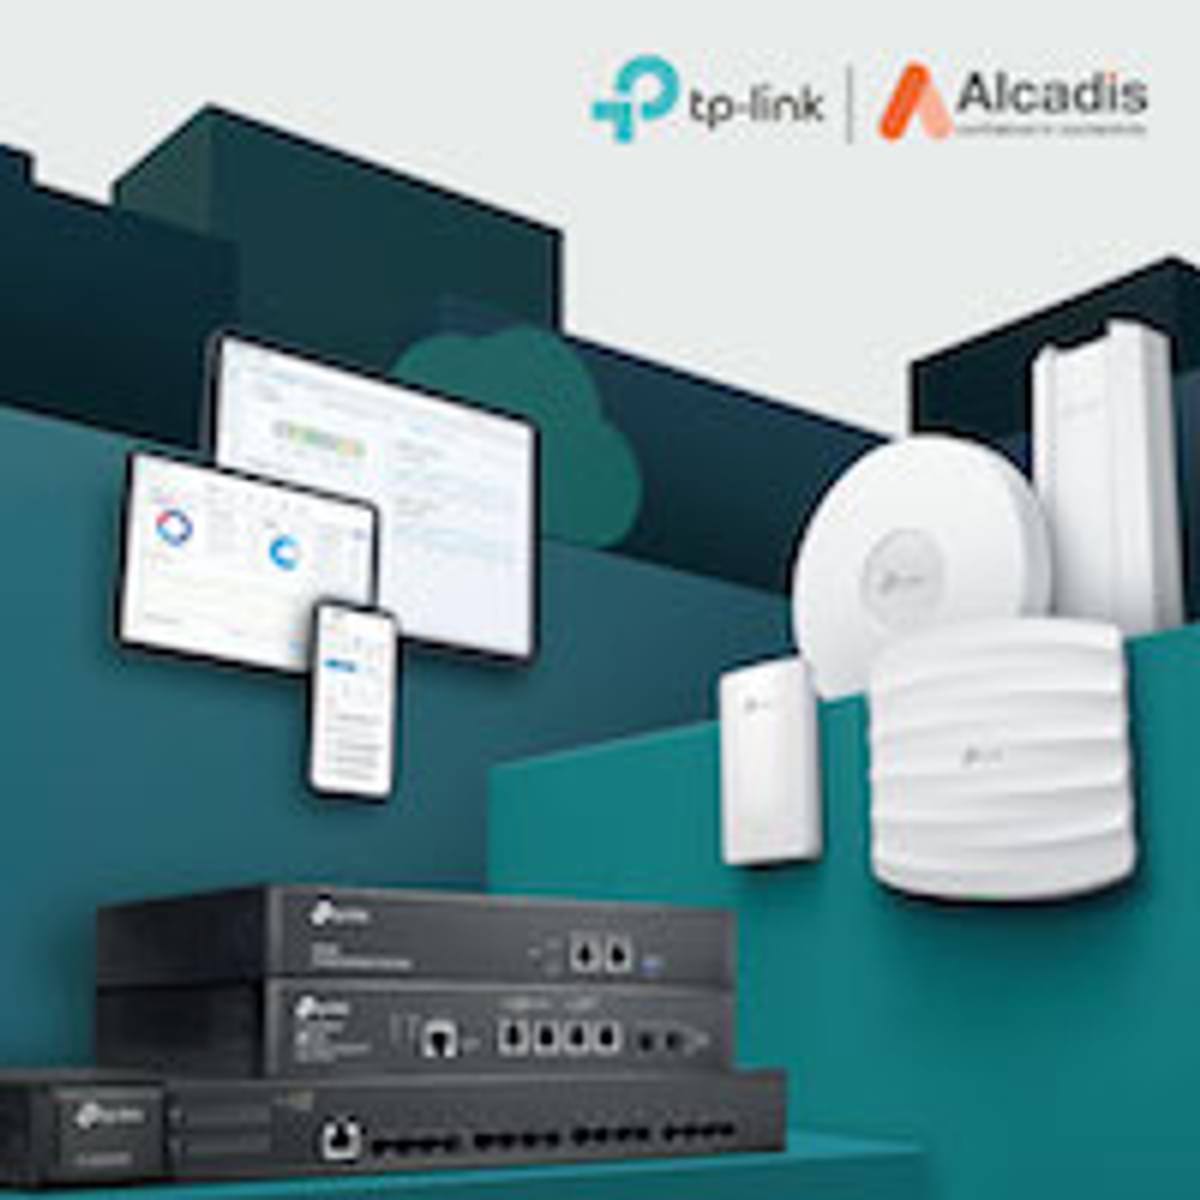 Alcadis en TP-Link lanceren Network as a Service model image